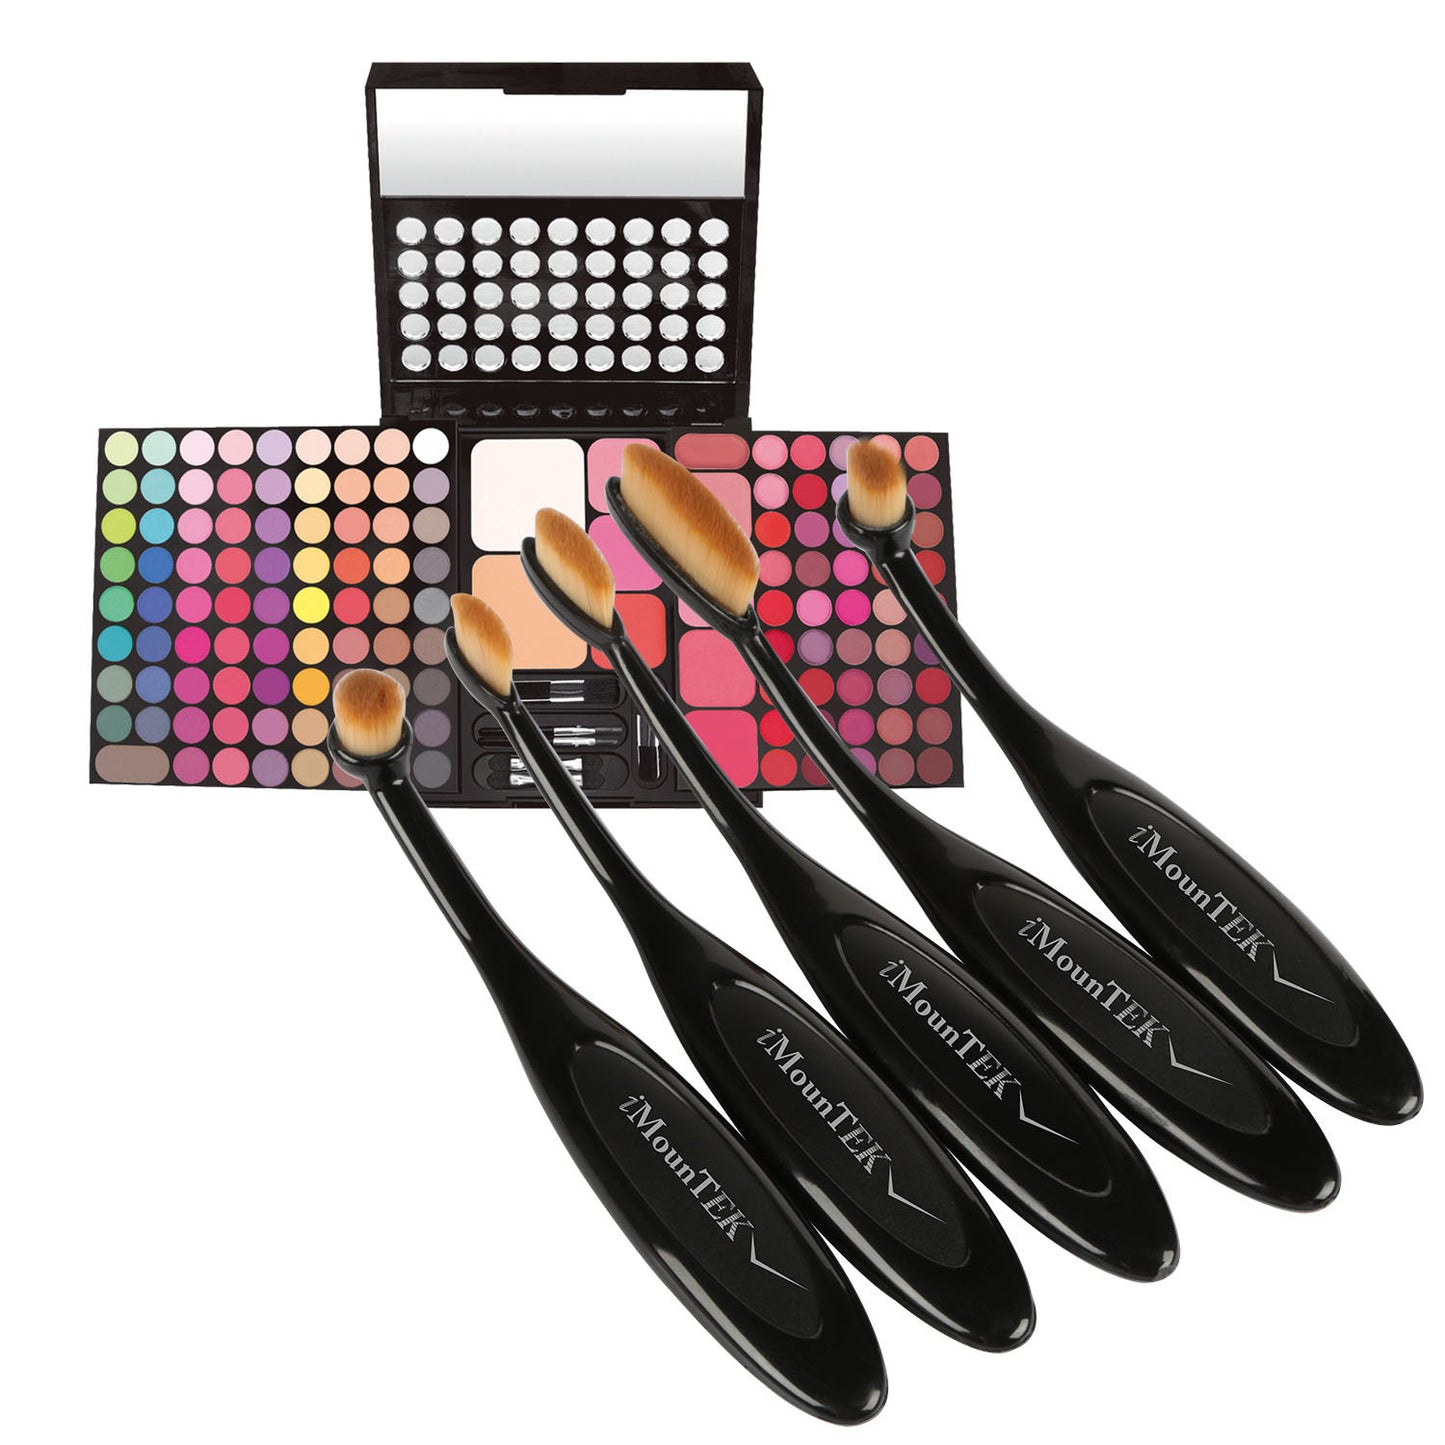 10-PCS Oval-Shaped Brush Set for Contour Makeup Application